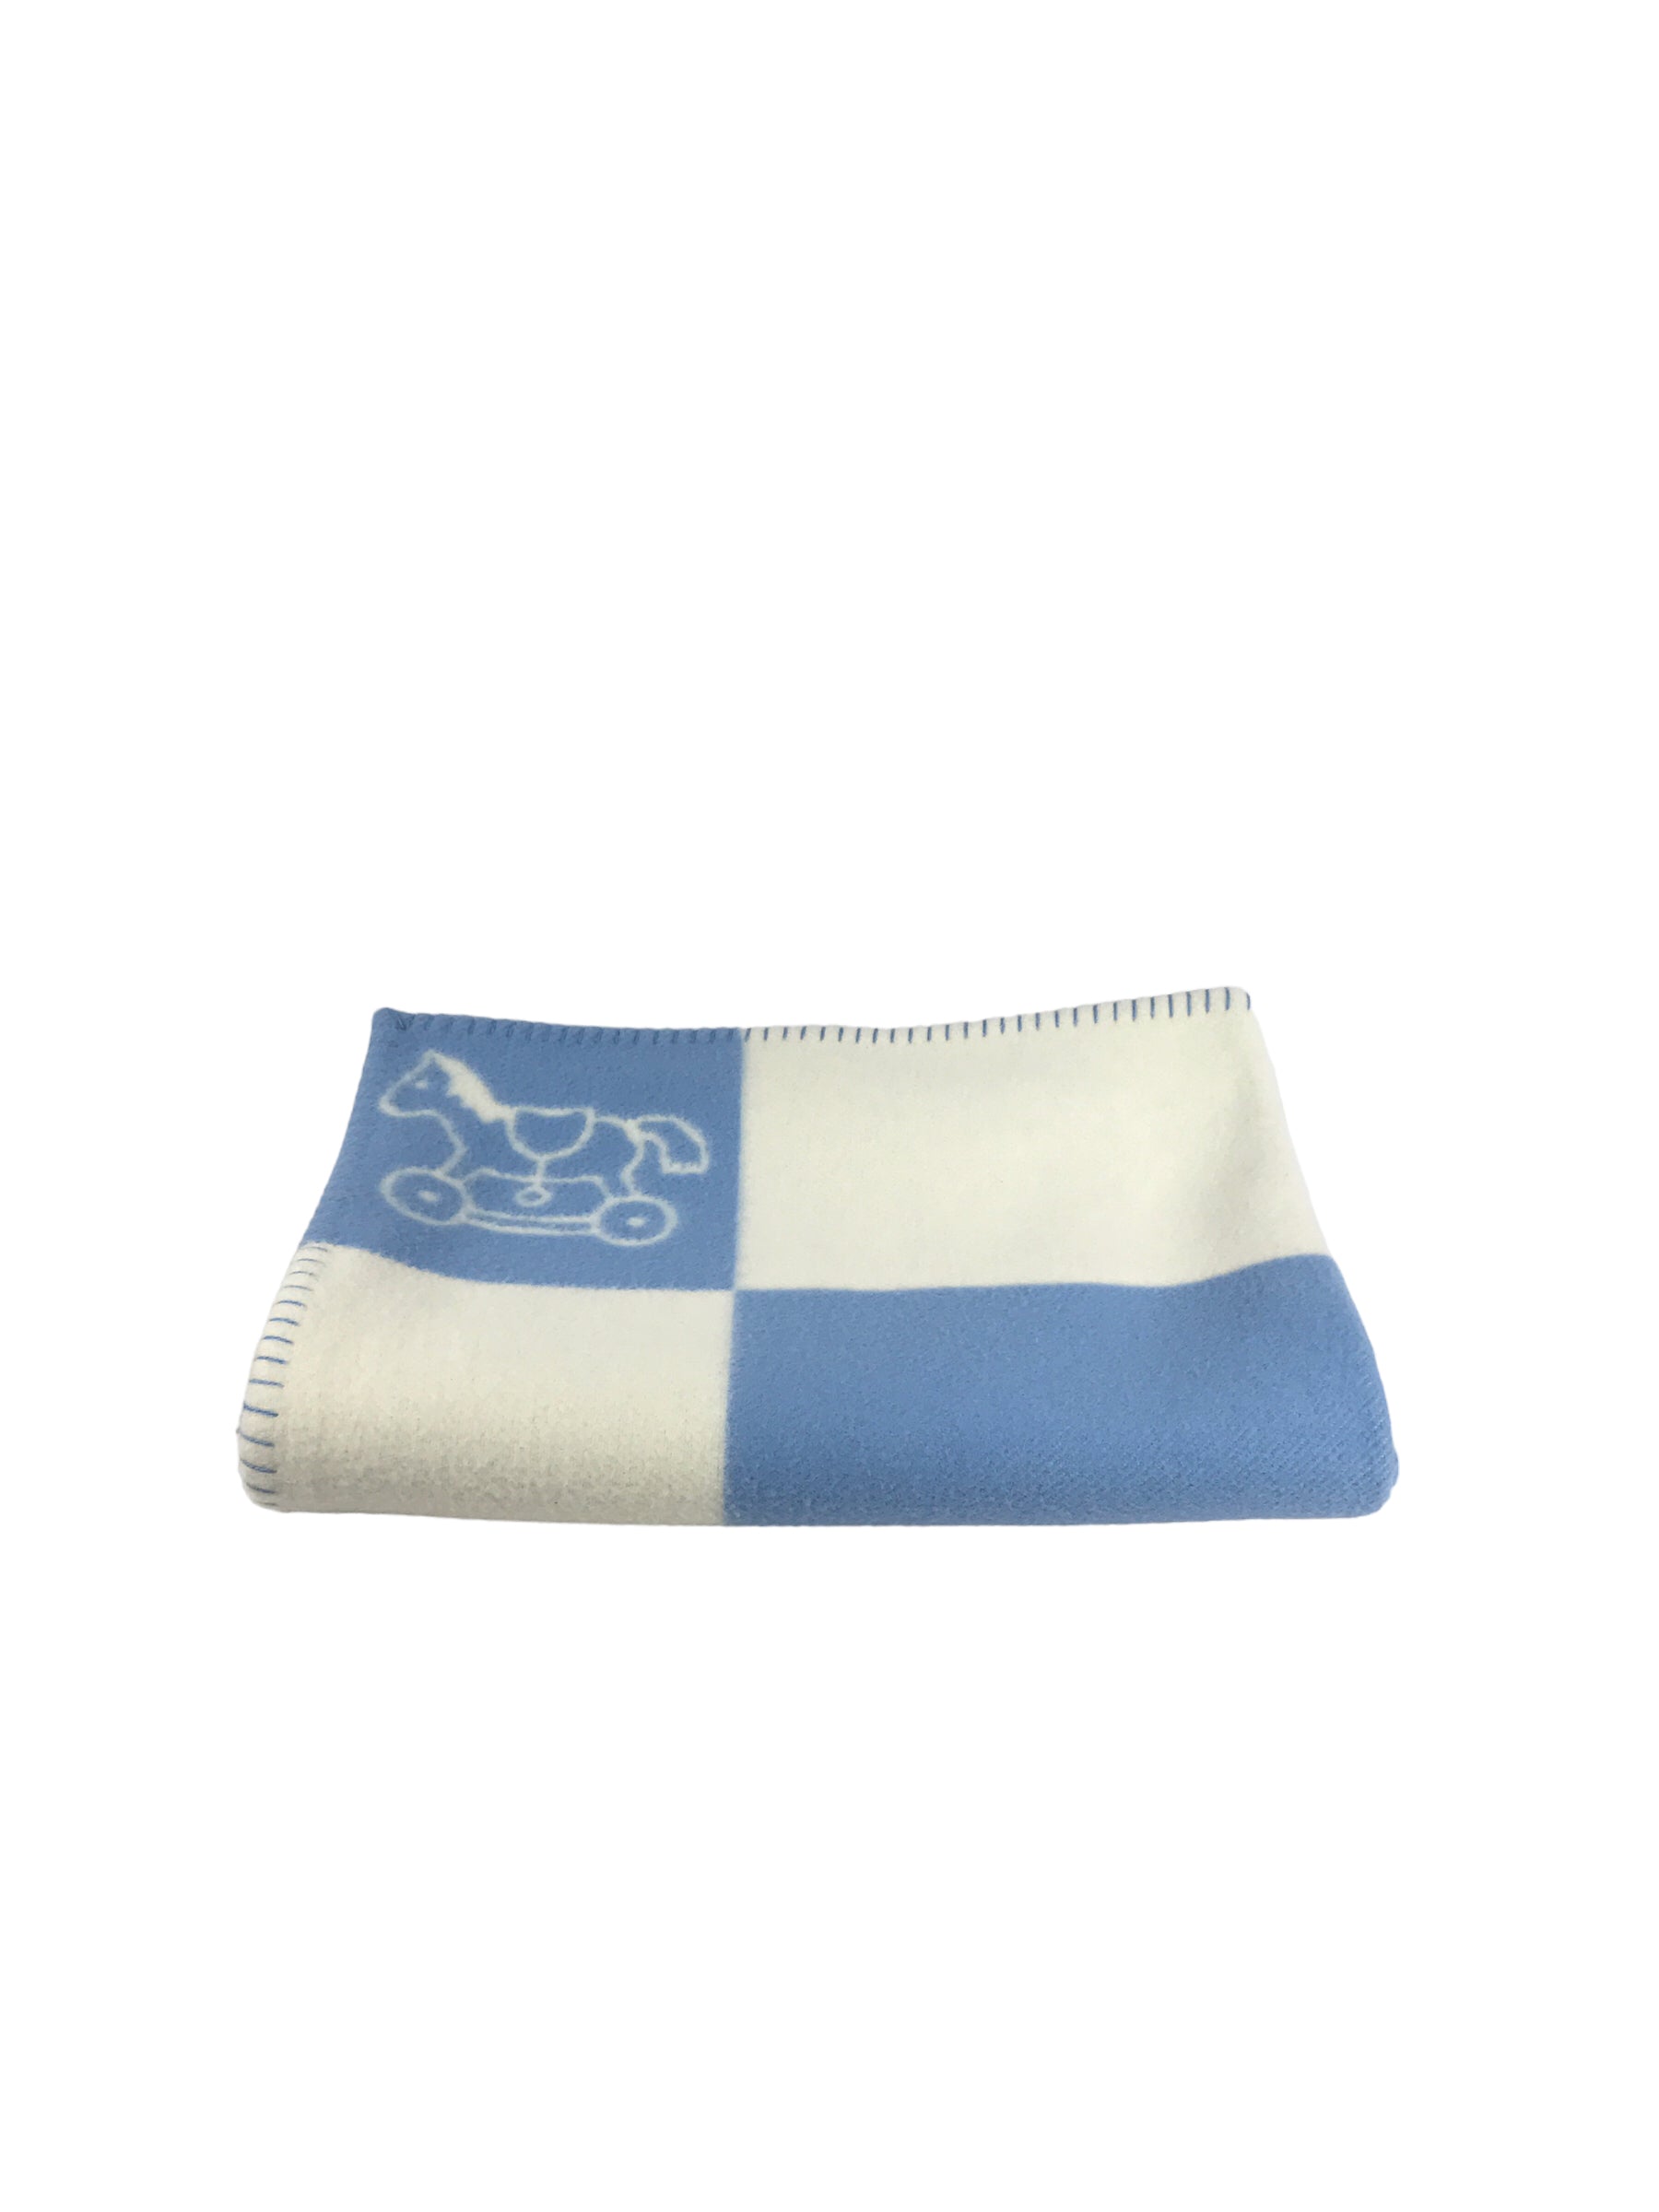 Adada Avalon Bleu Glacier Merino Wool/Cashmere Blanket